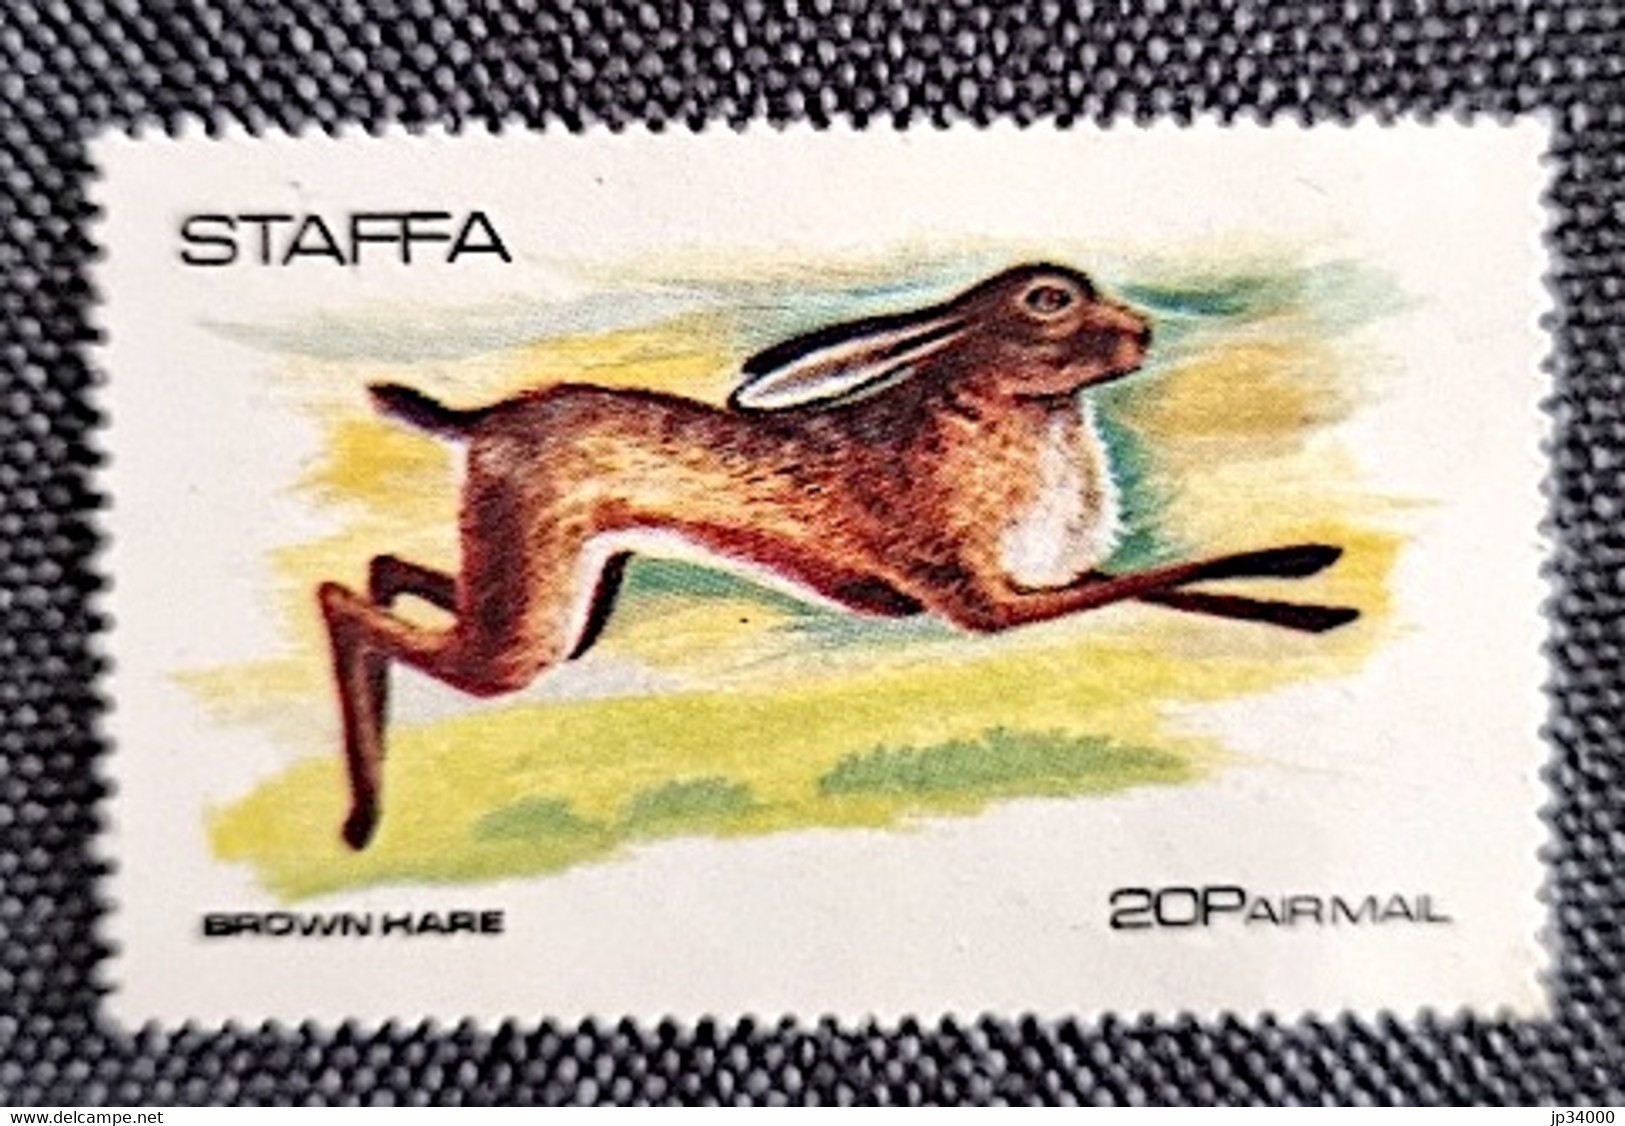 STAFFA Lapins, Lapin, Rabbit, Conejo. (1 Valeur Dentelée.) ** Neuf Sans Charnière - Konijnen